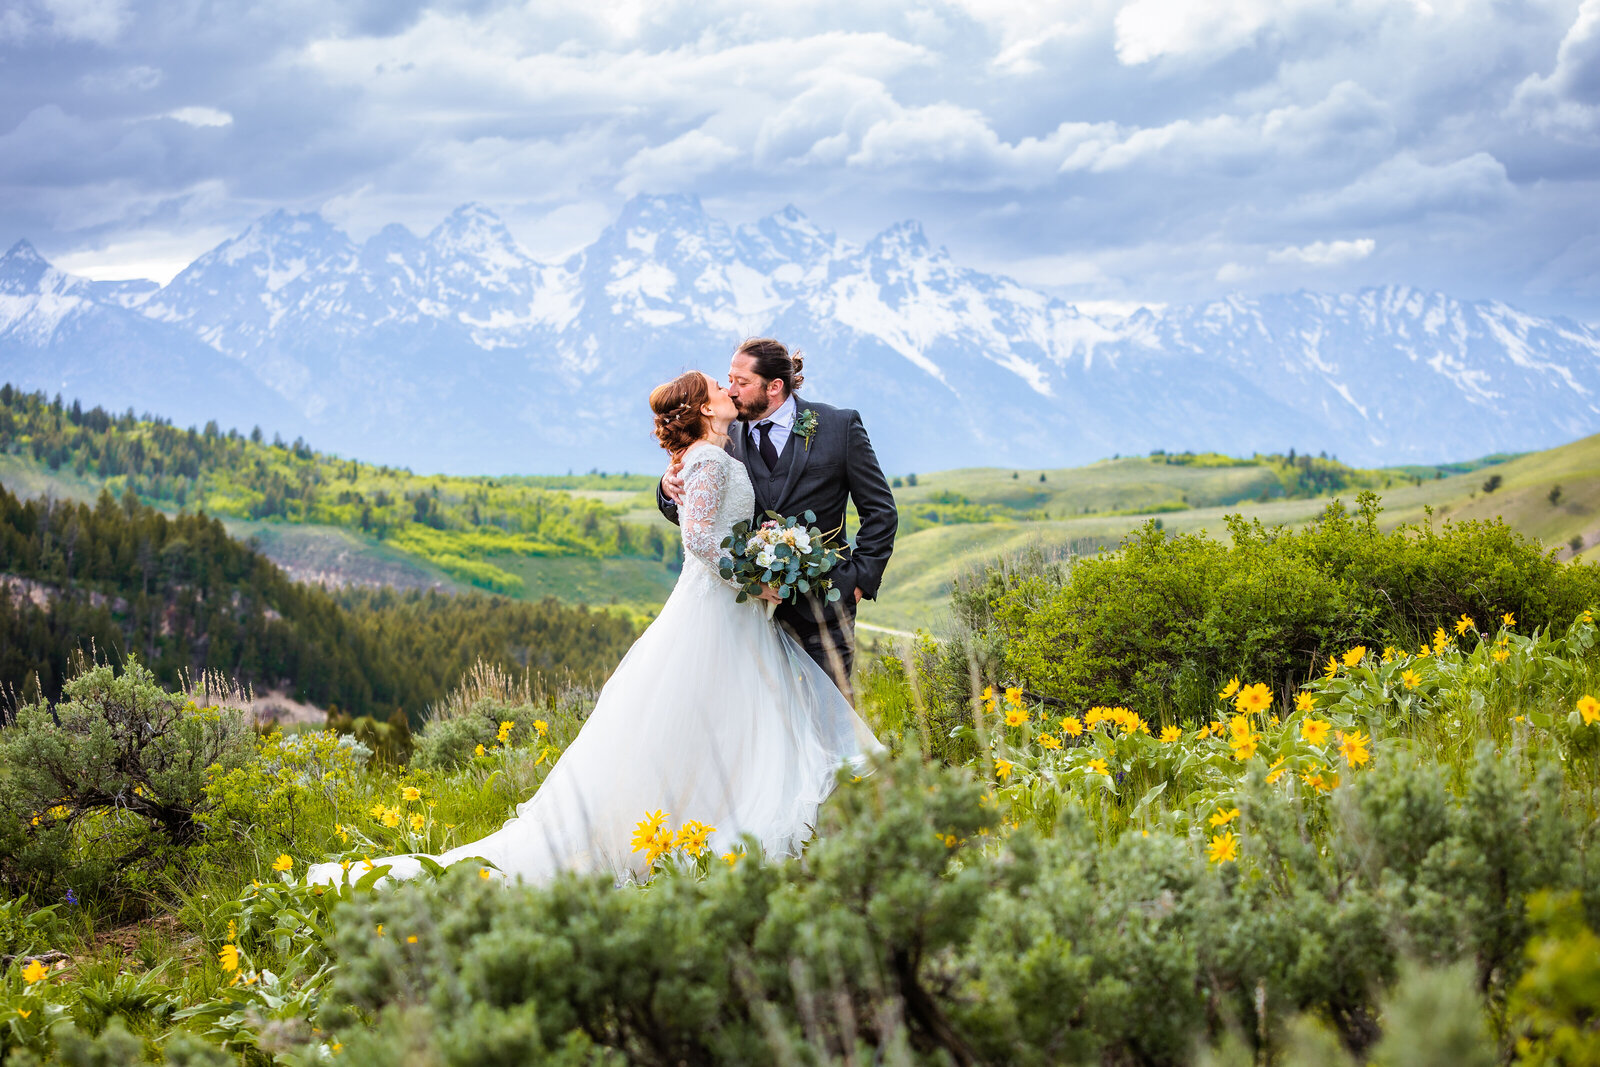 Jackson Hole photographers capture bride and groom kissing after wedding